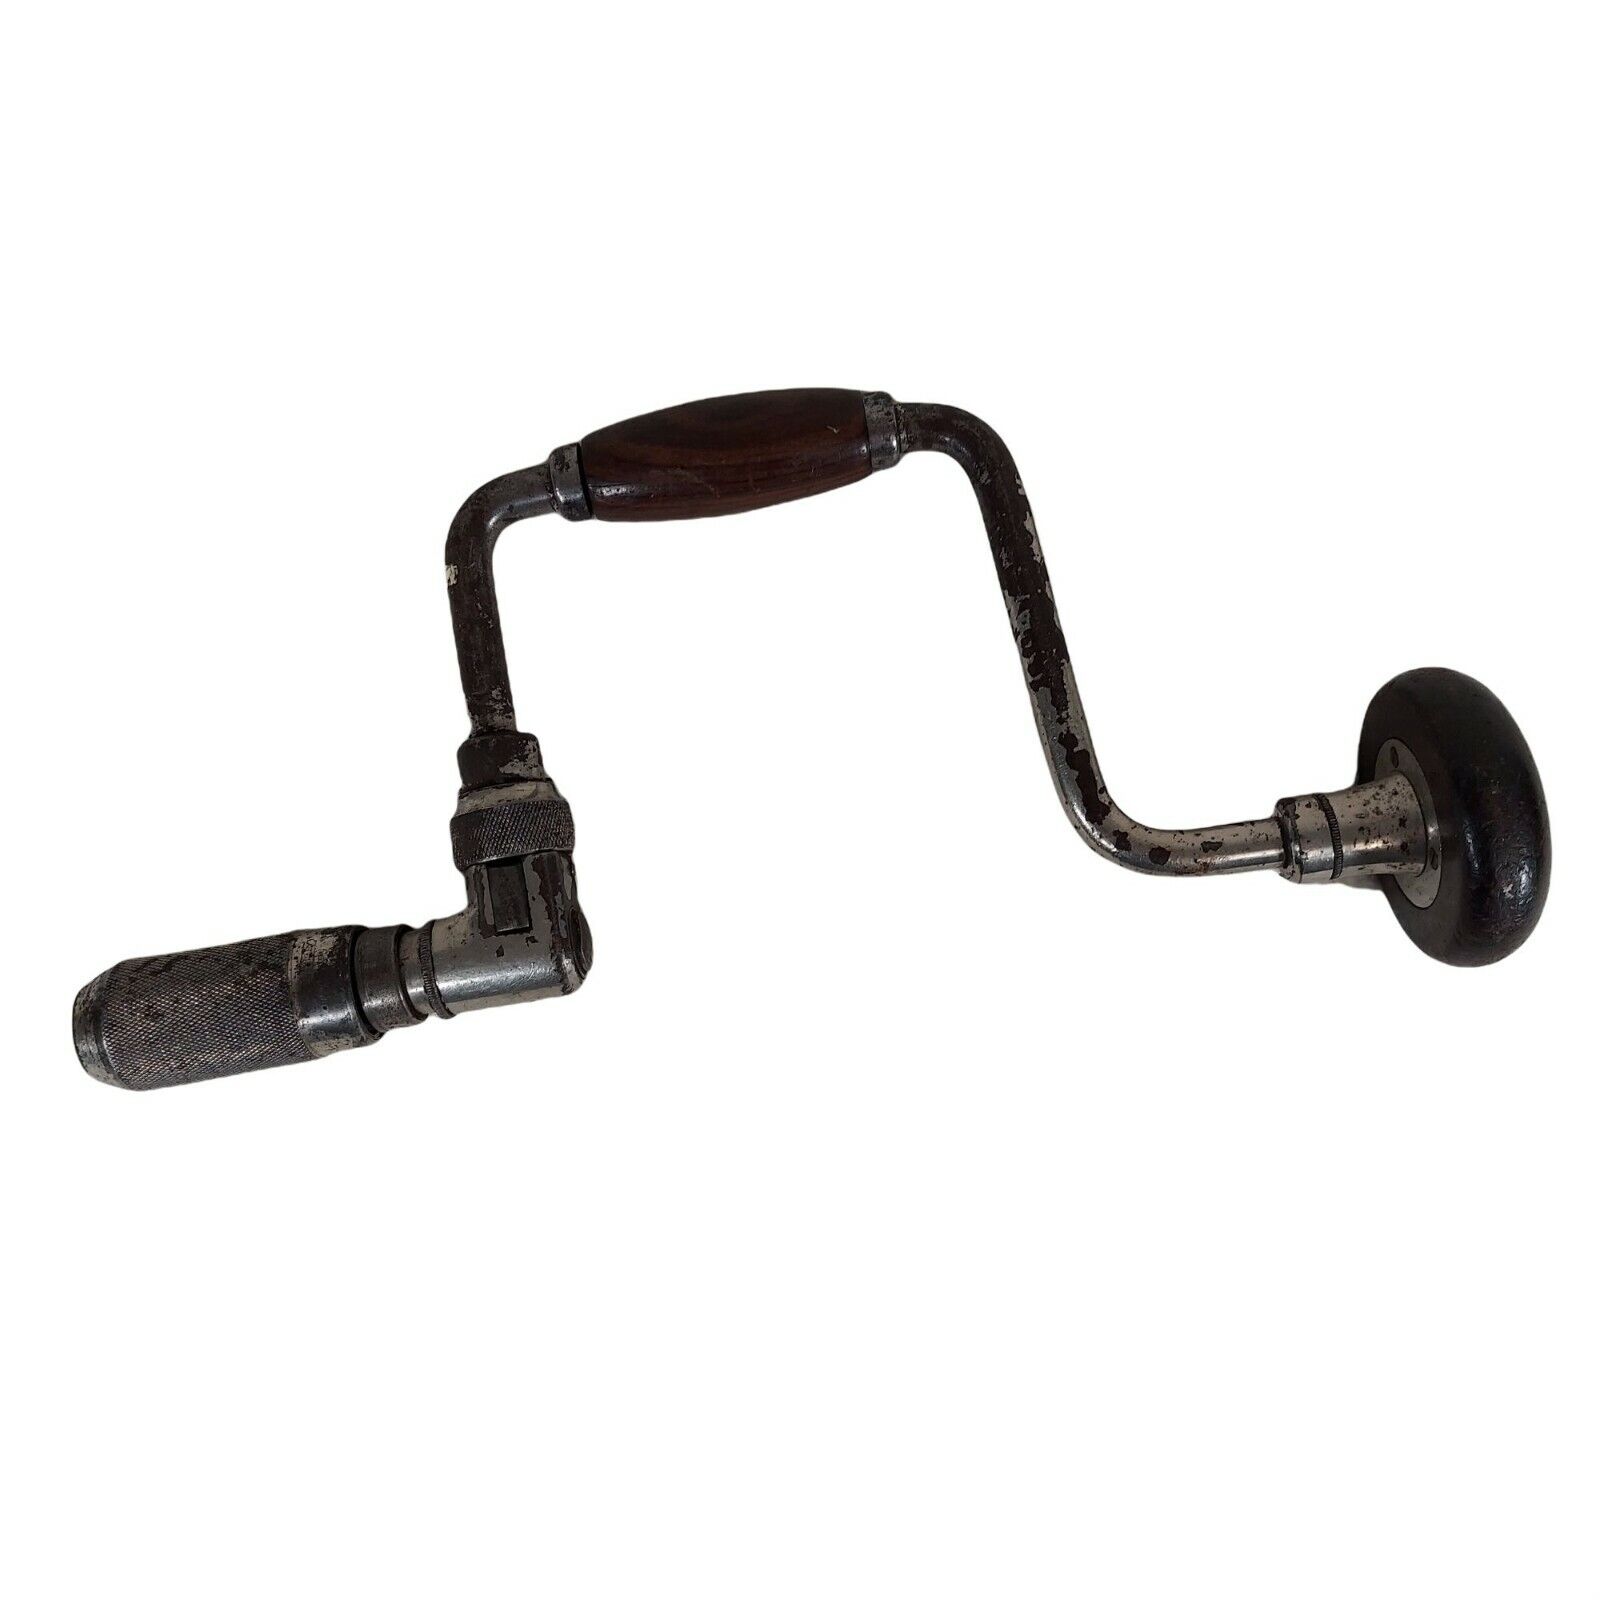 Vintage Stanley Sweat Heart Brace Bit Hand Drill No. 903 - 10in Antique Rare